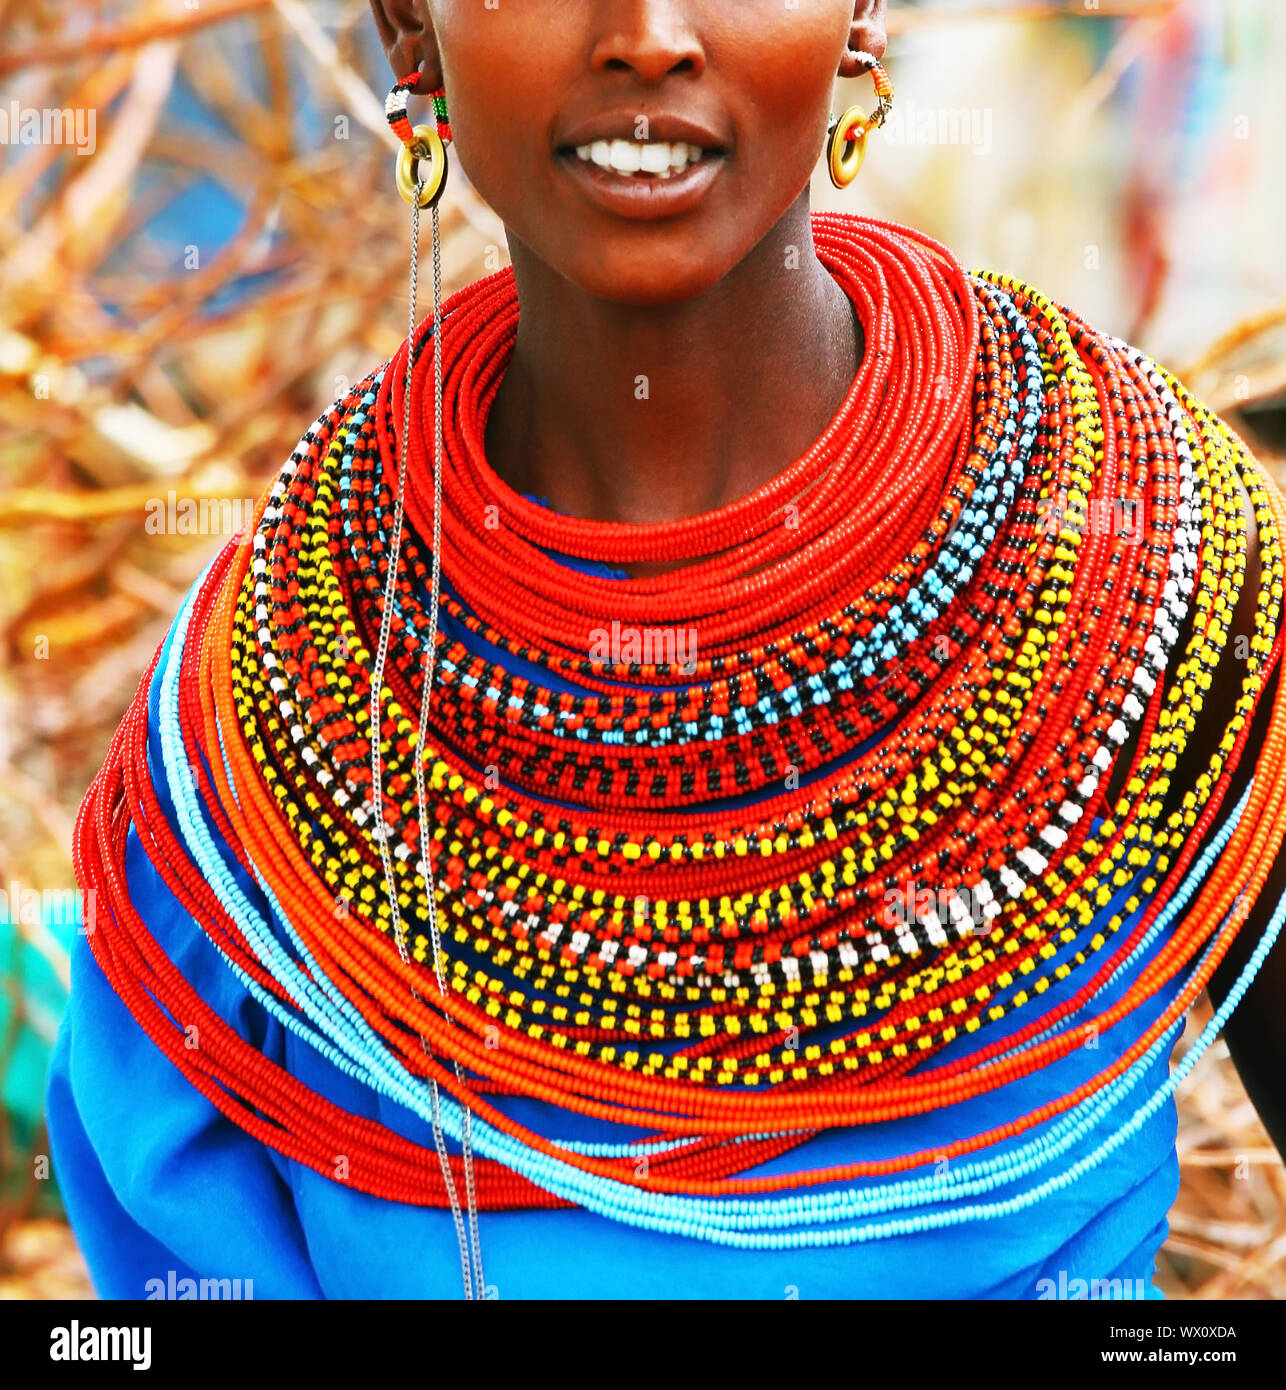 AFRICA, KENYA, SUMBURU, NOVEMBER 8:Portrait of Sumburu woman wearing traditional handmade accessories, review of daily life of local people, near Sumb Stock Photo